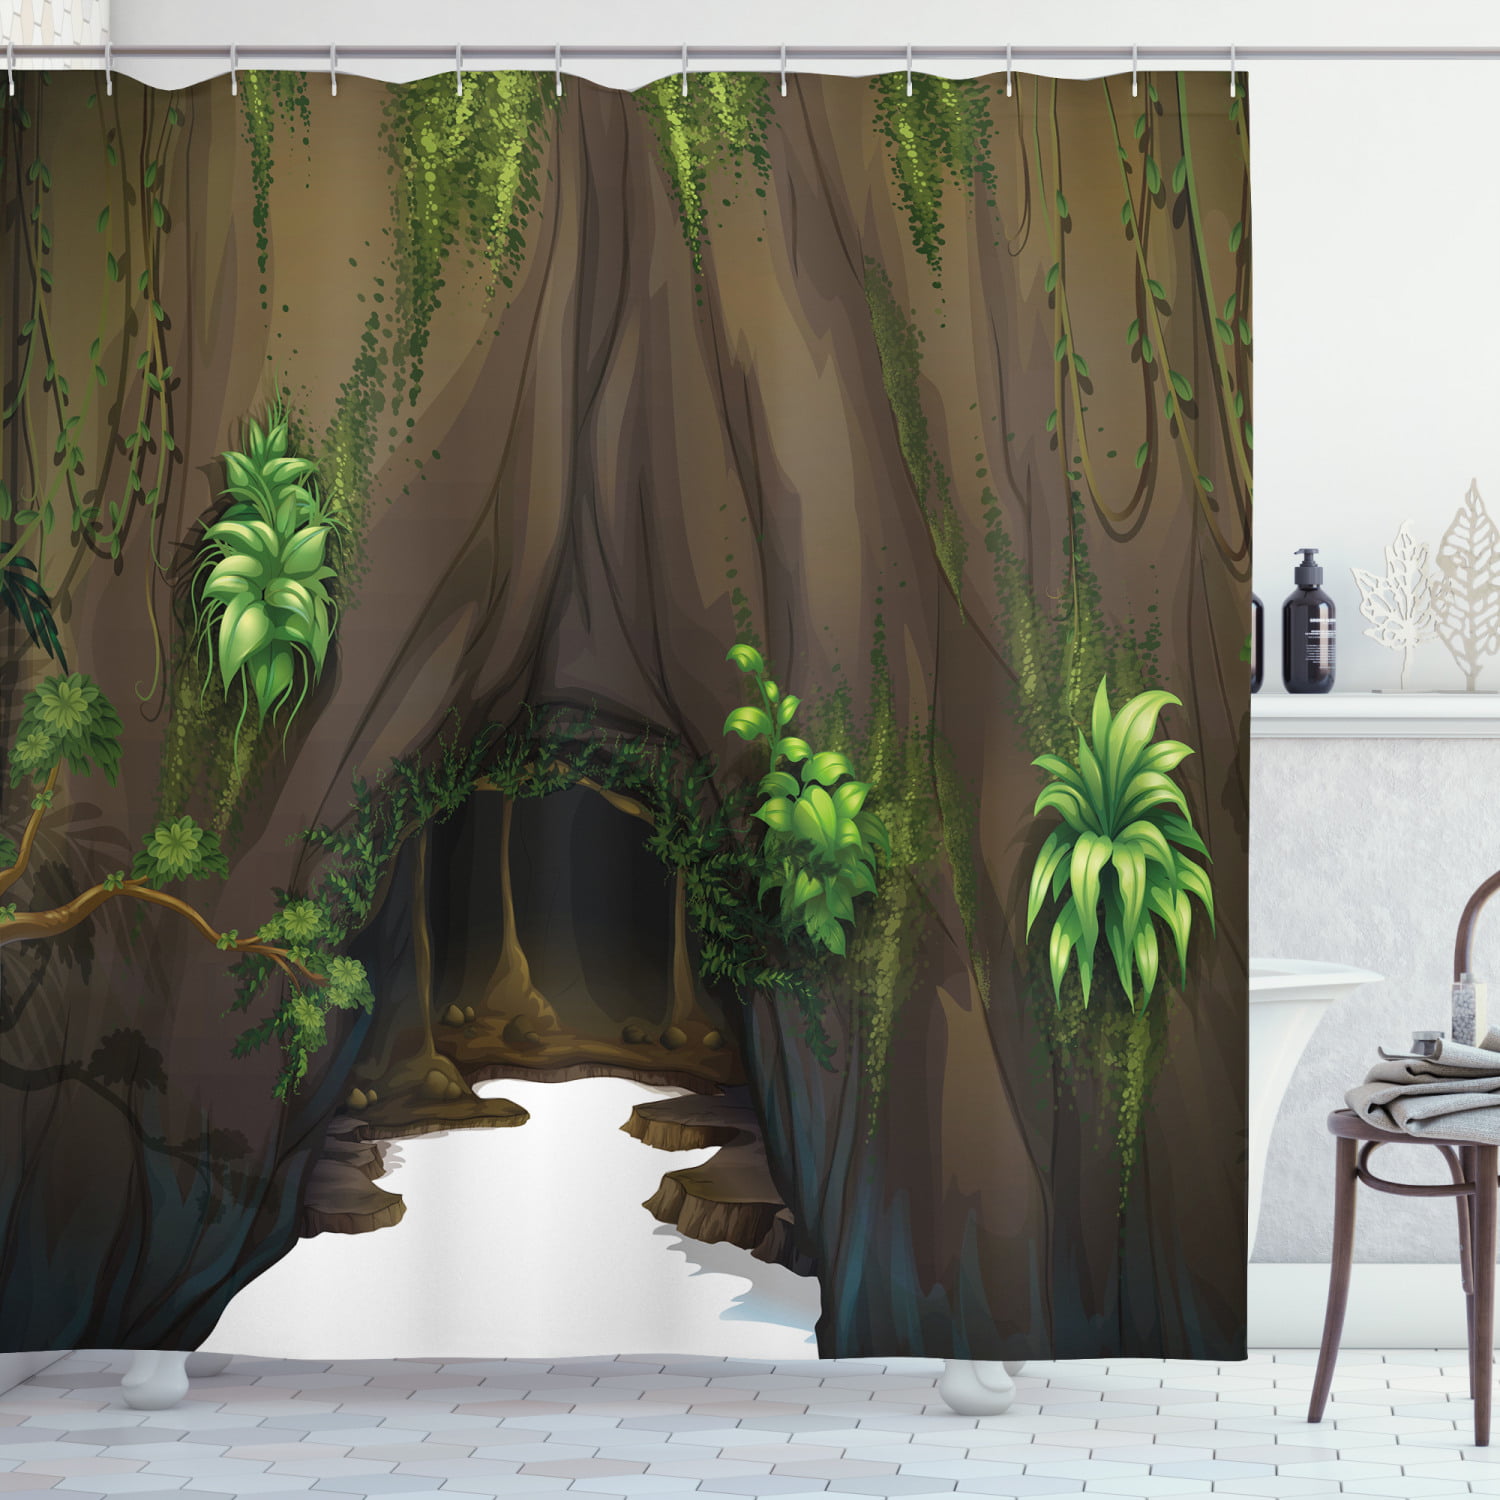 Bathroom Waterproof Fabric Shower Curtain Set Cartoon Design Forest Green Trees 